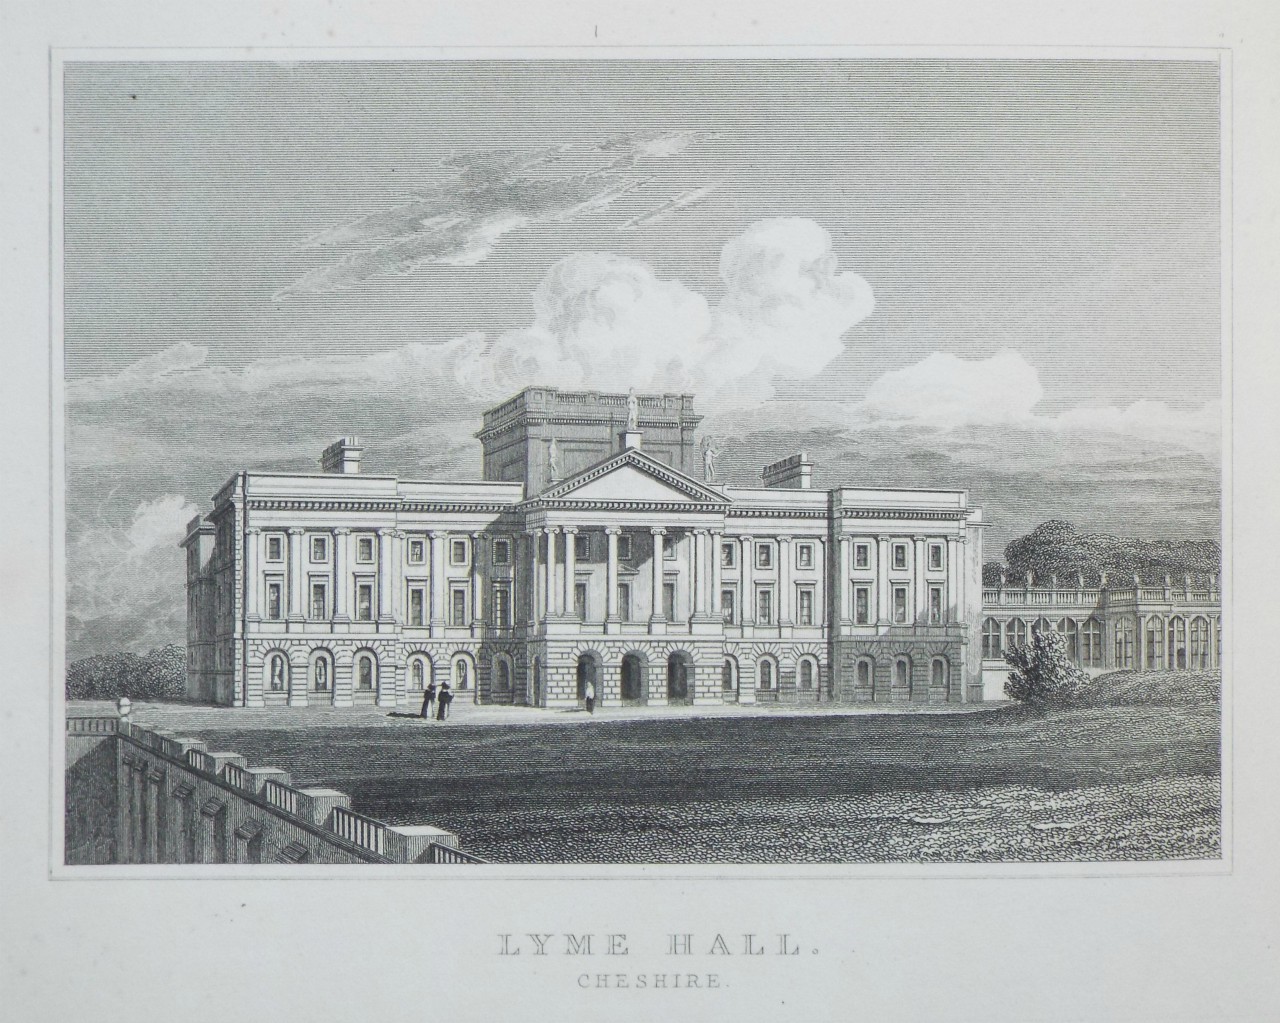 Print - Lyme Hall, Cheshire. - Wallis